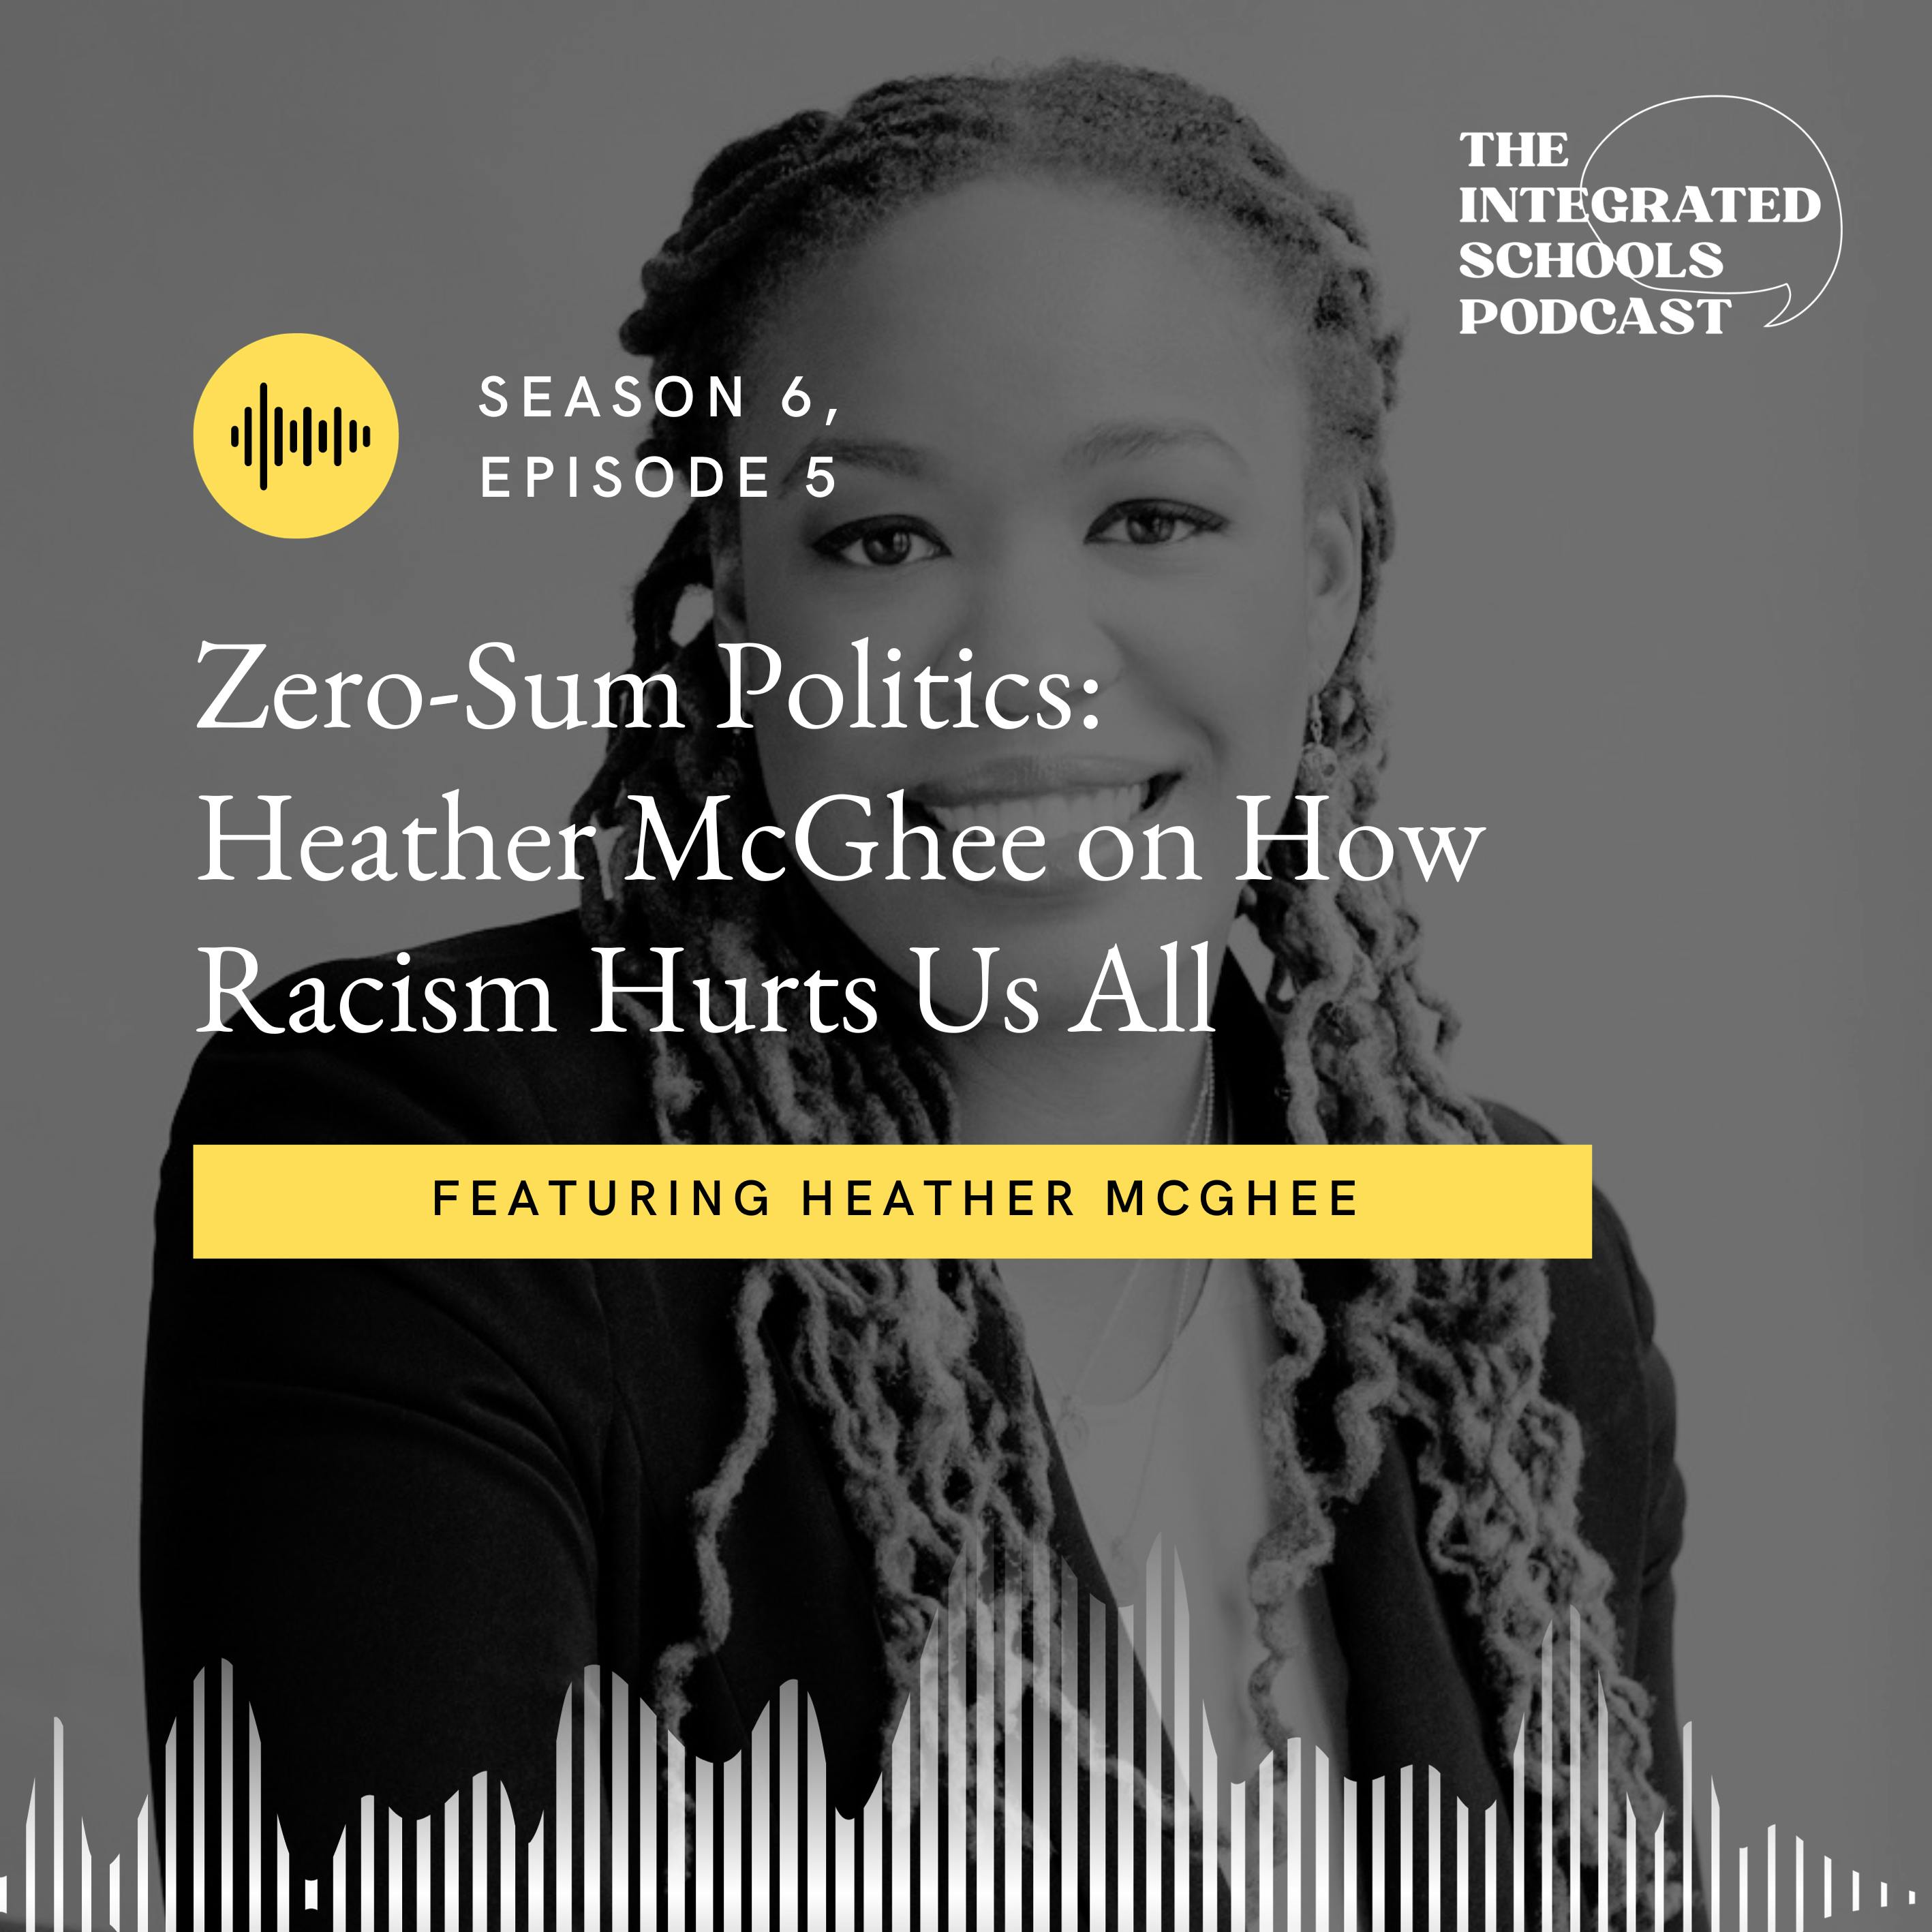 Zero-Sum Politics: Heather McGhee on How Racism Hurts Us All